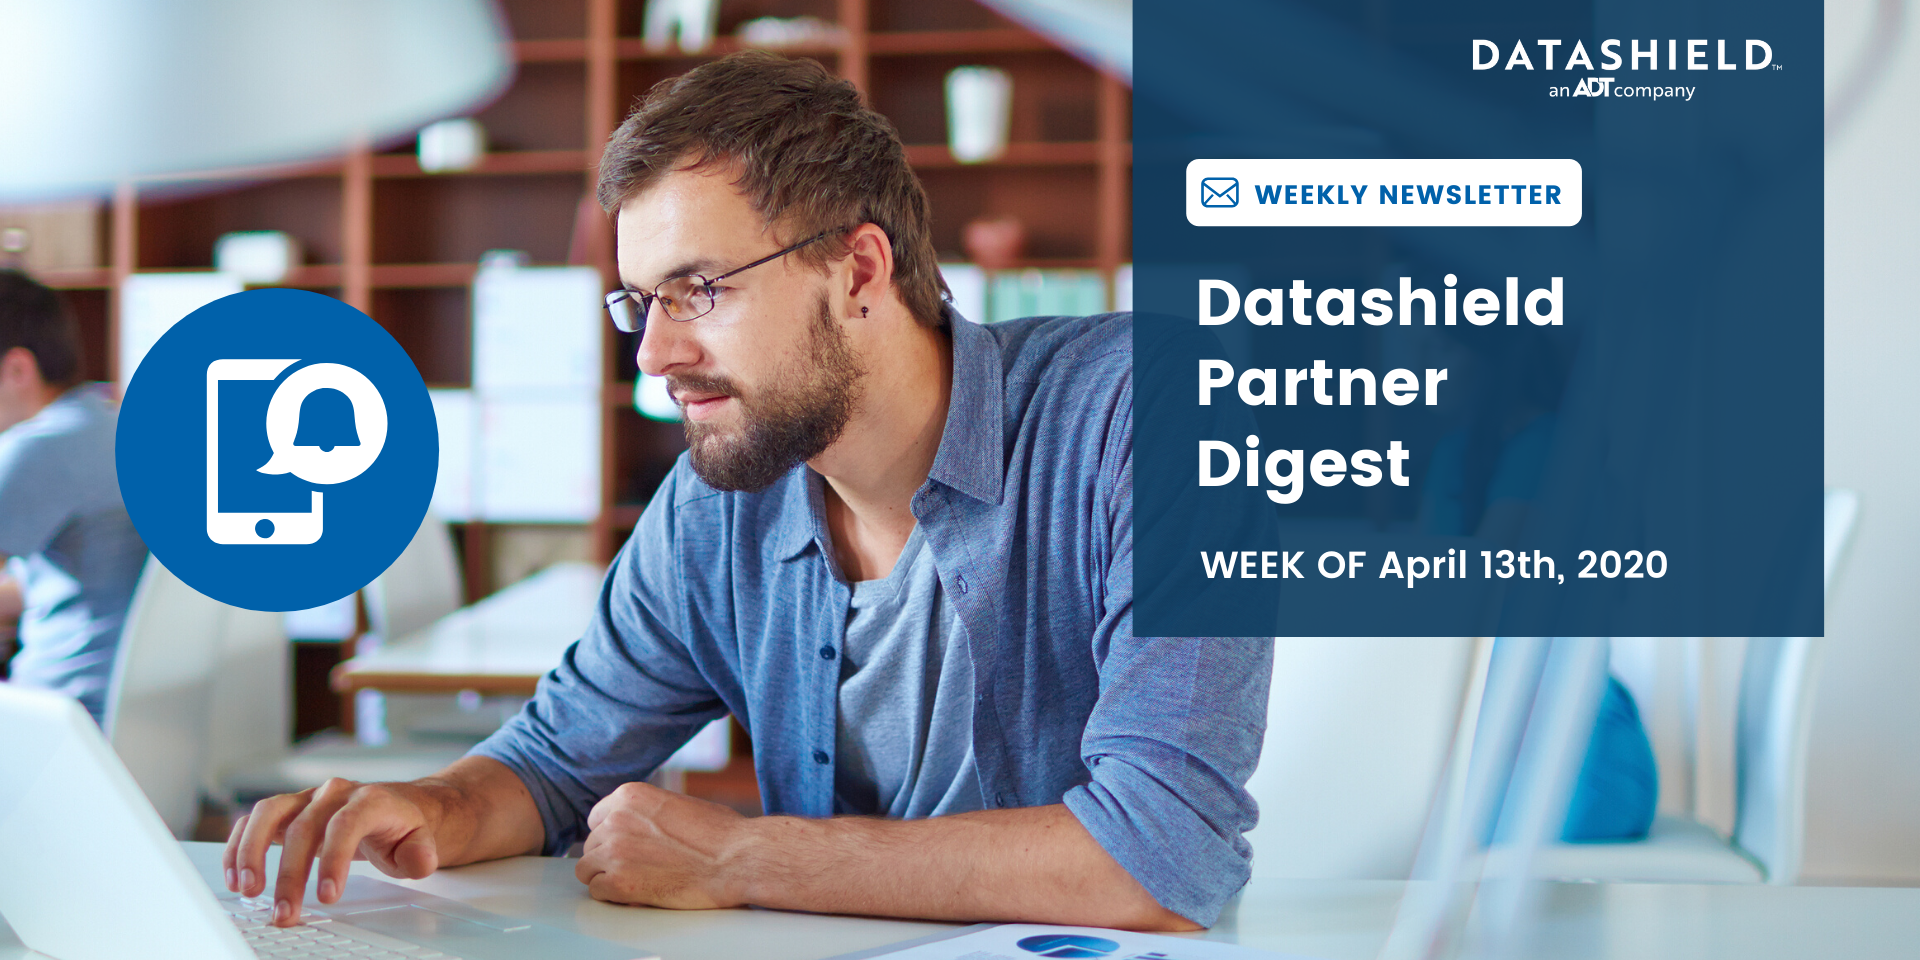 Datashield Partner Digest 04/13/20